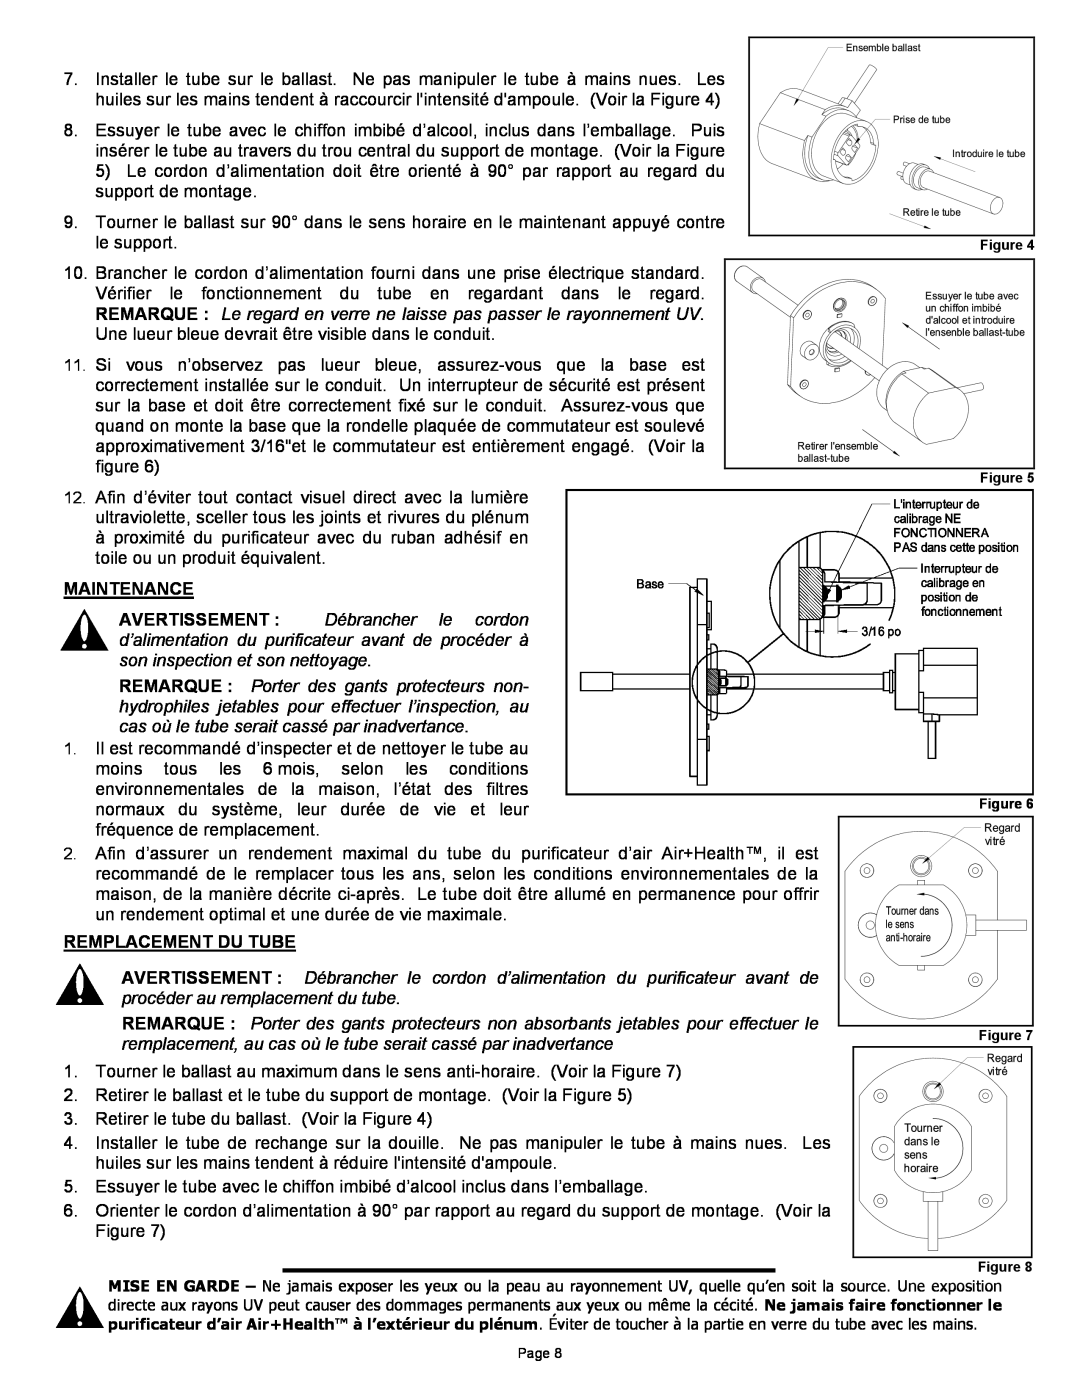 Air Health AH-RL, AH-1 instruction sheet Maintenance, Remplacement Du Tube 